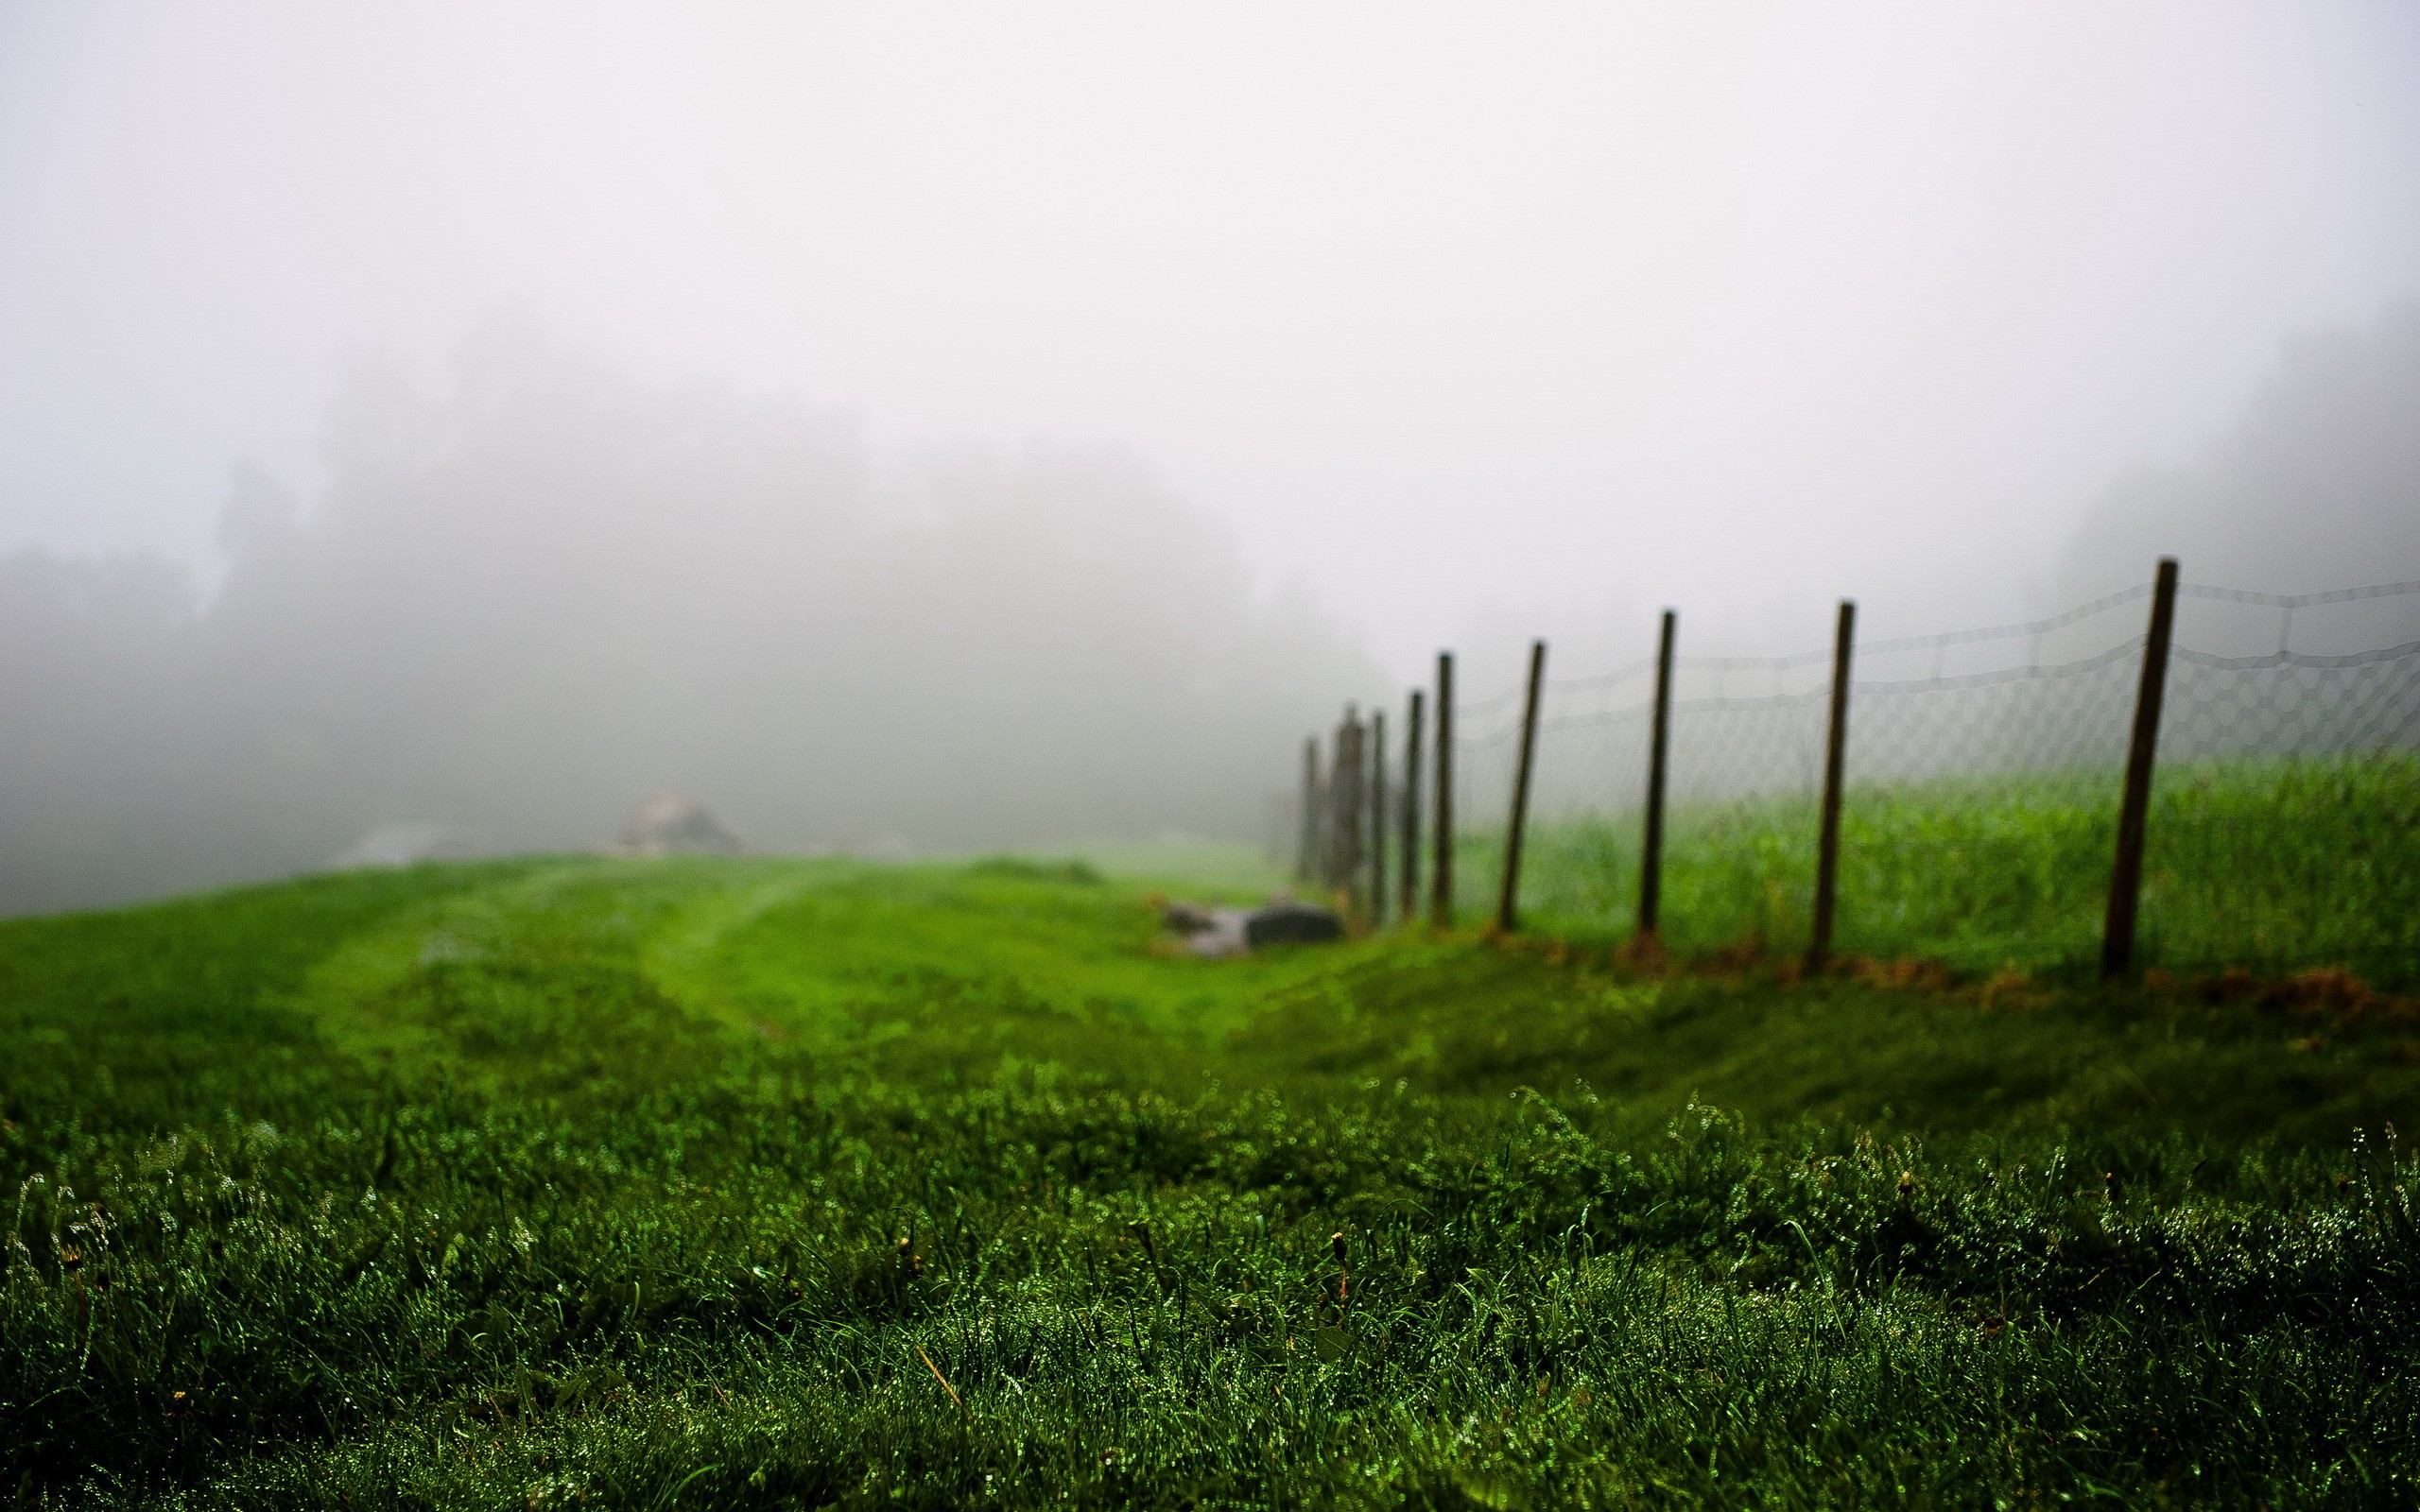 General 2560x1600 nature blurred grass mist fence green depth of field